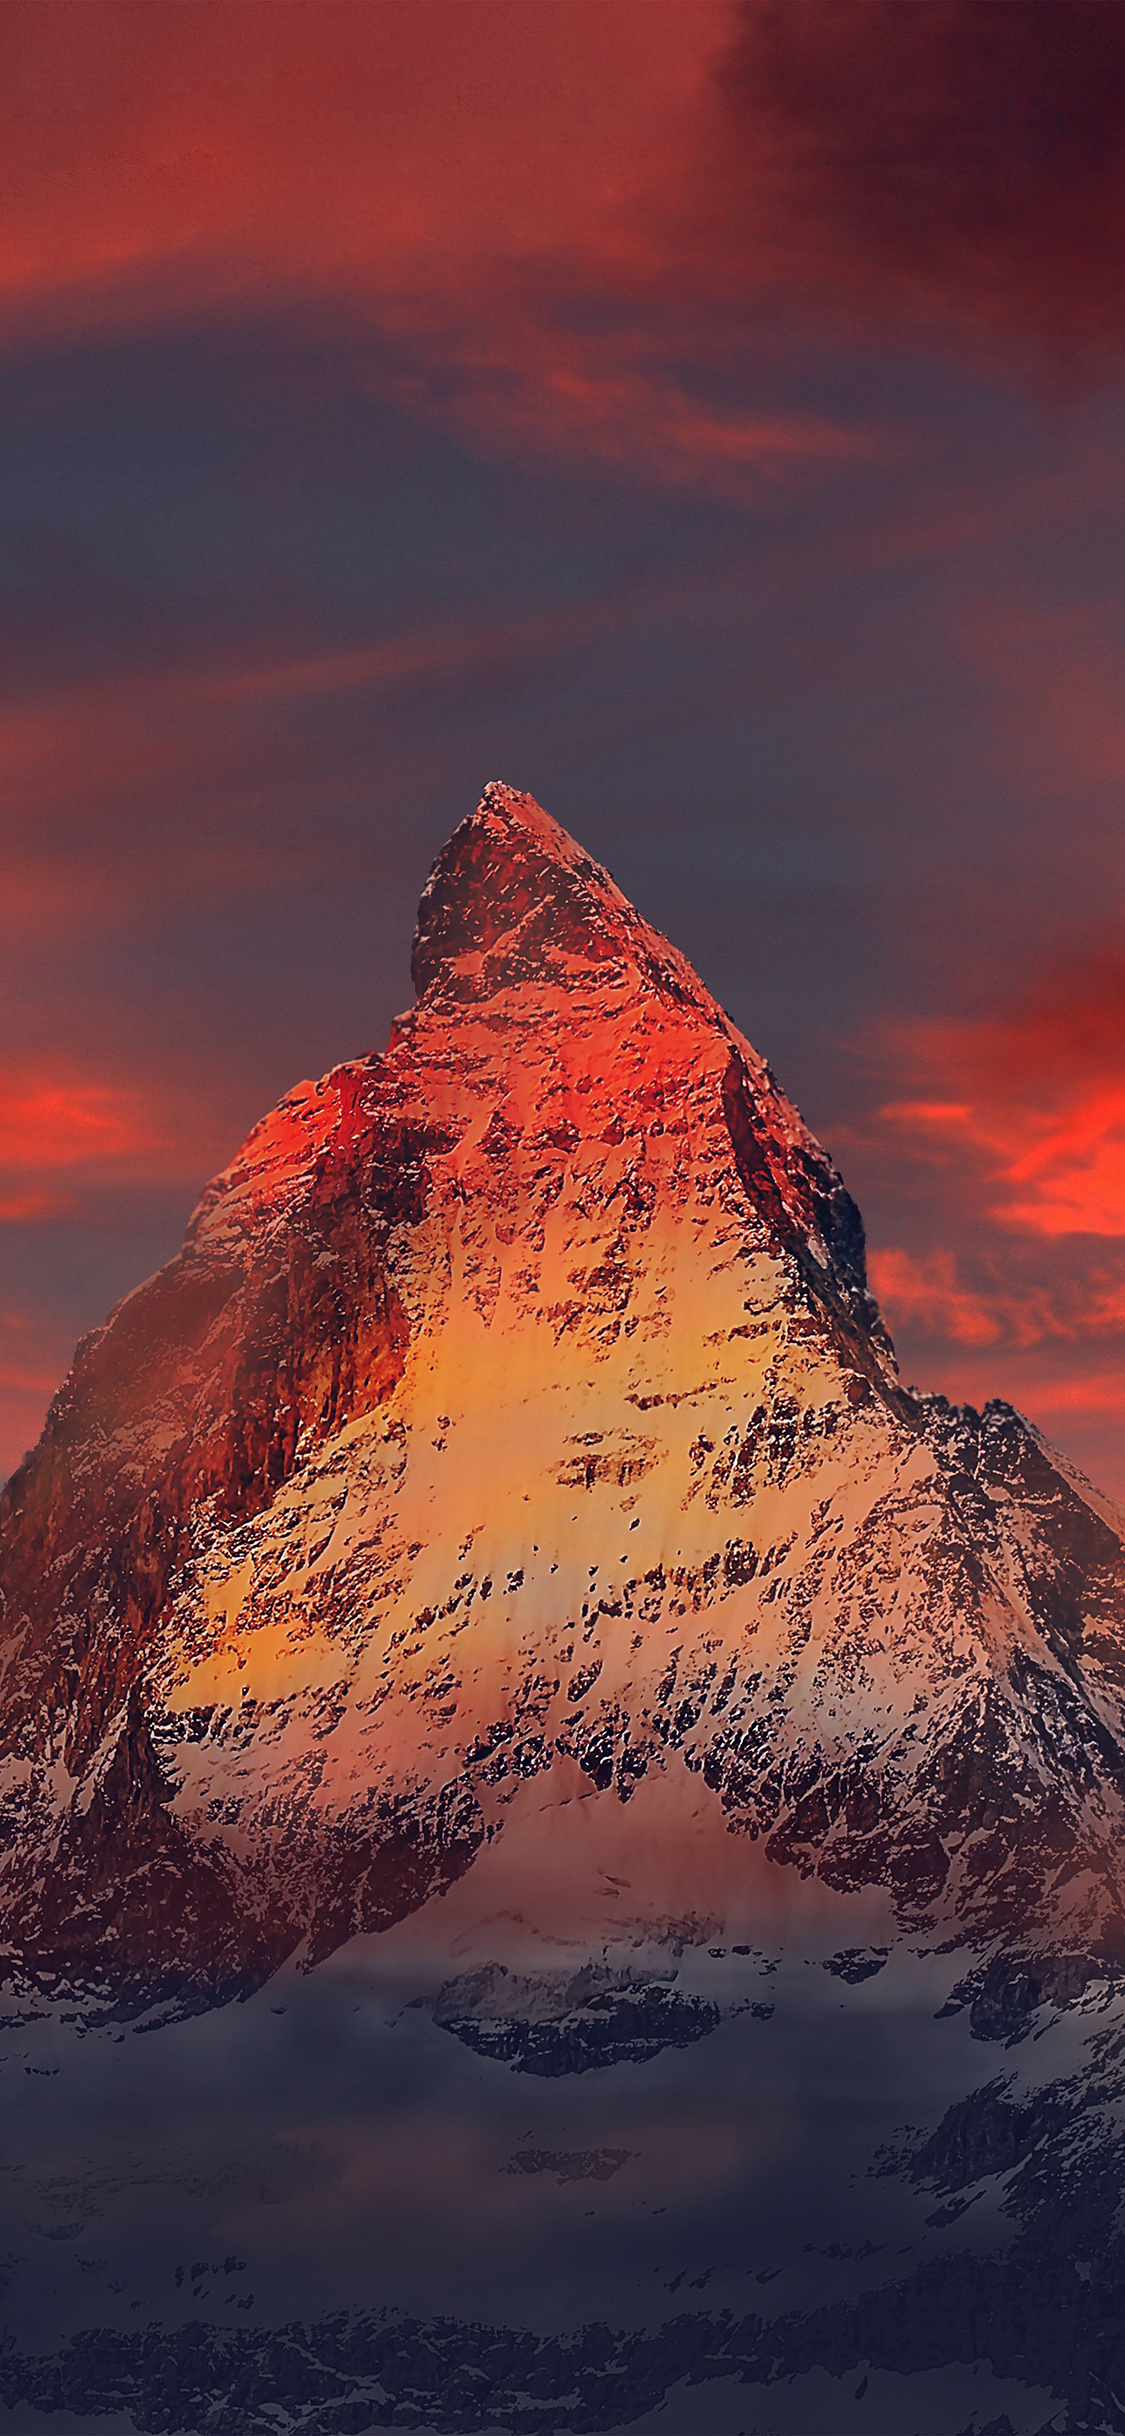 iPhone X wallpaper. swizeland zermatt mountain red nature